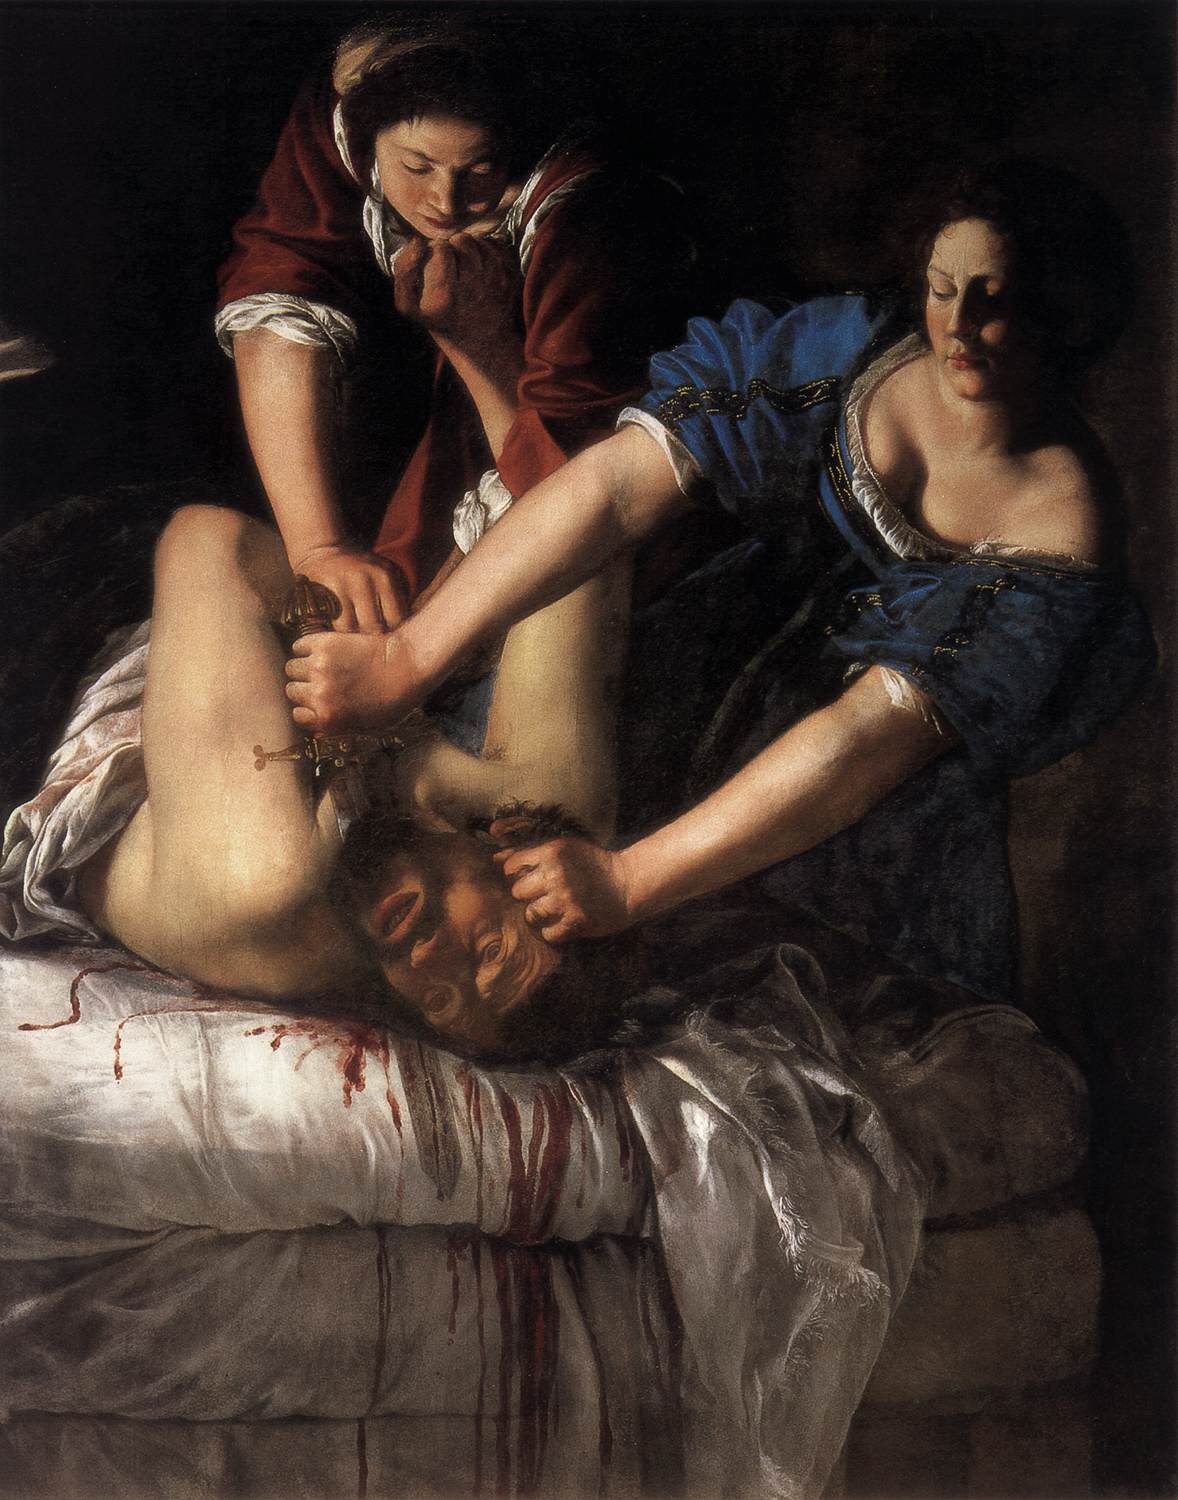 Artemisia Gentileschi "Judith Slaying Holofernes" (C. 1614-20)